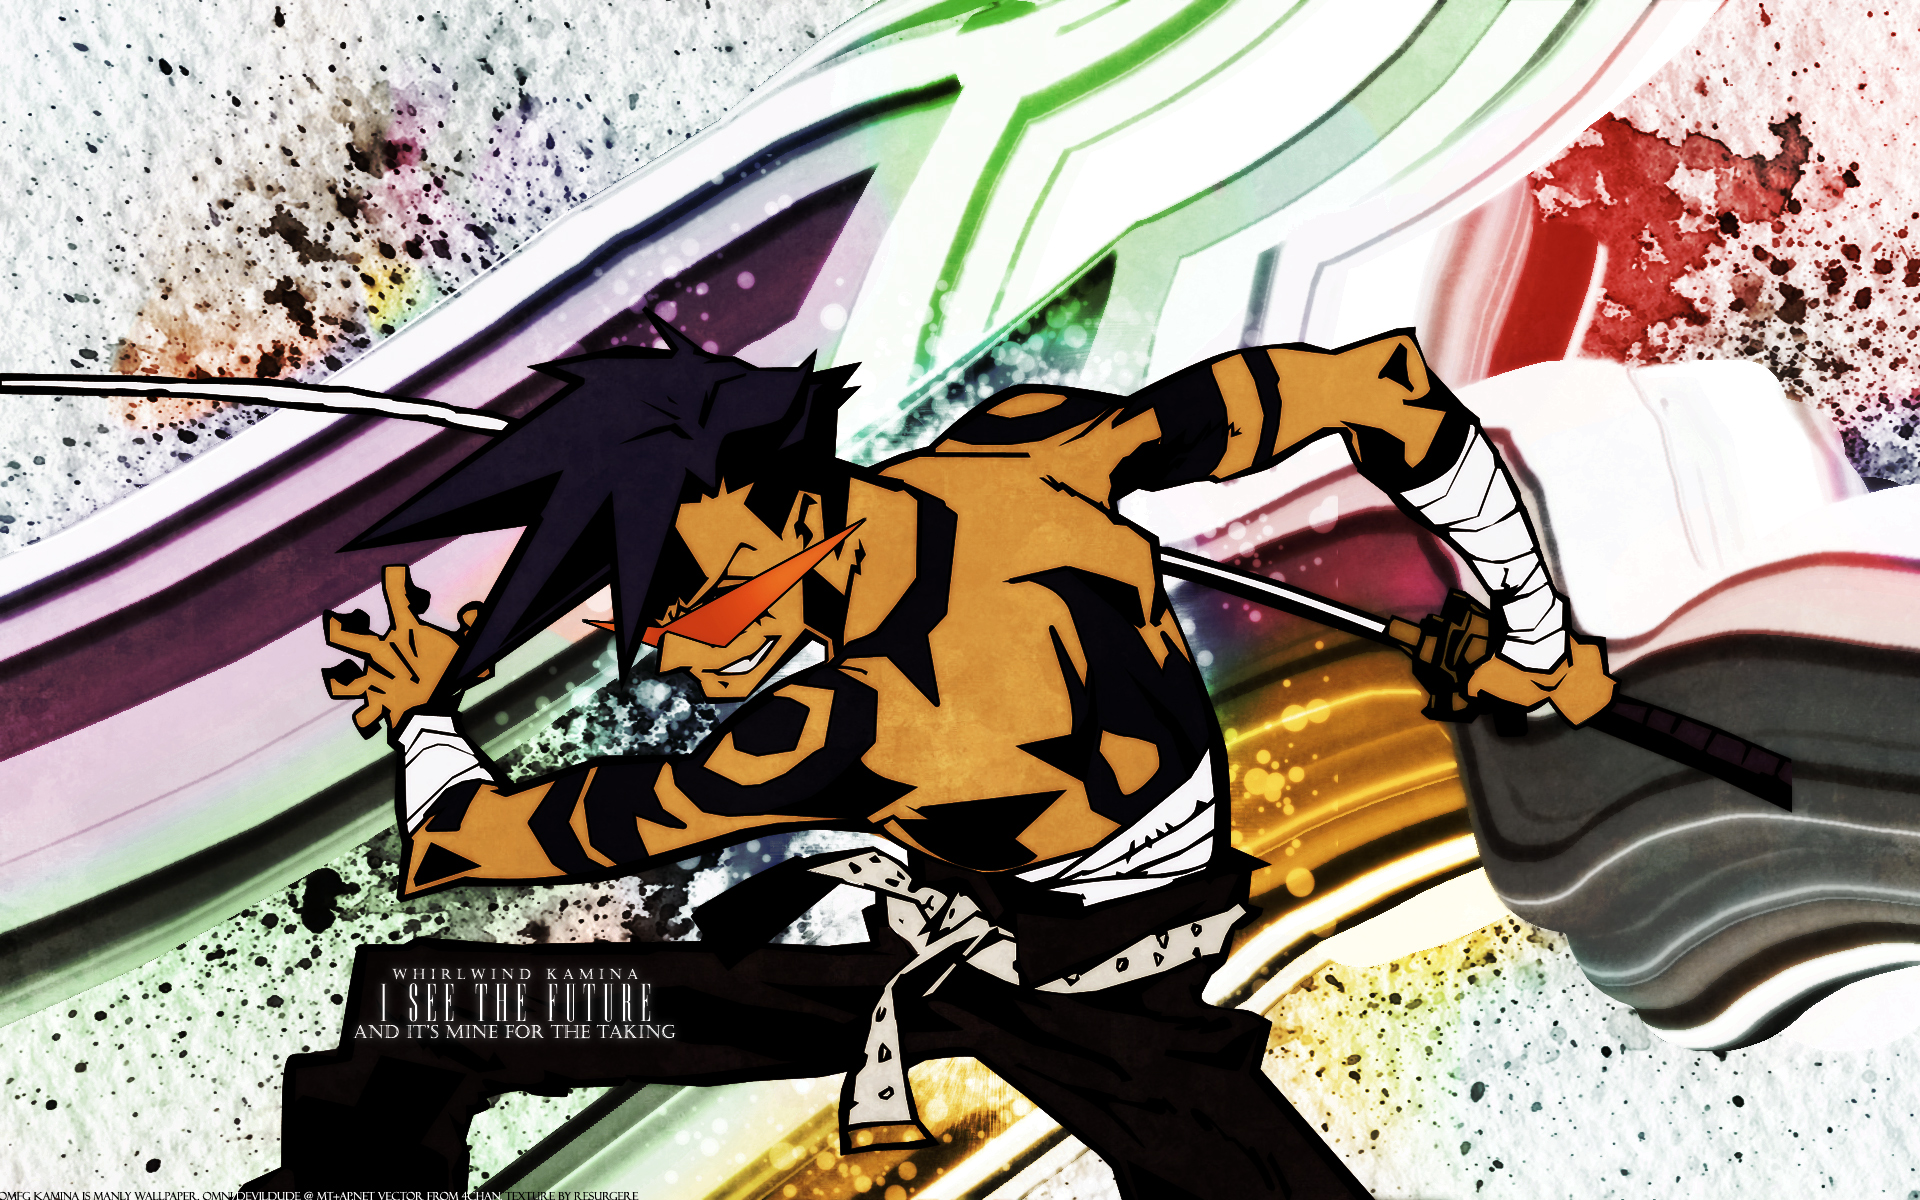 Anime characters piloting mechs in a fierce battle - Tengen Toppa Gurren Lagann.